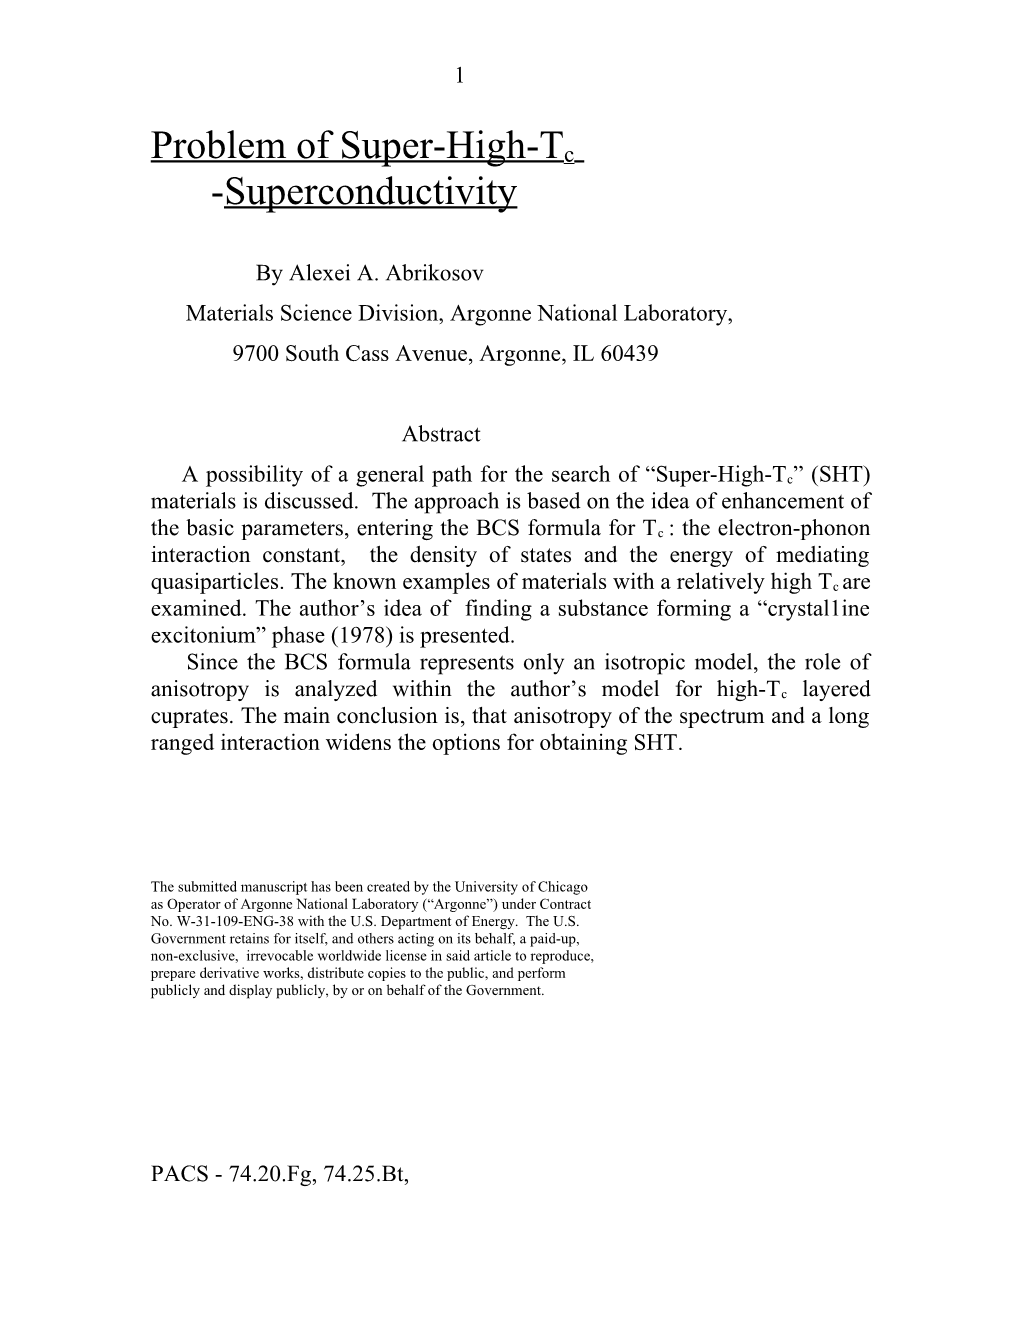 Model for a Super-High-Tc Superconductor